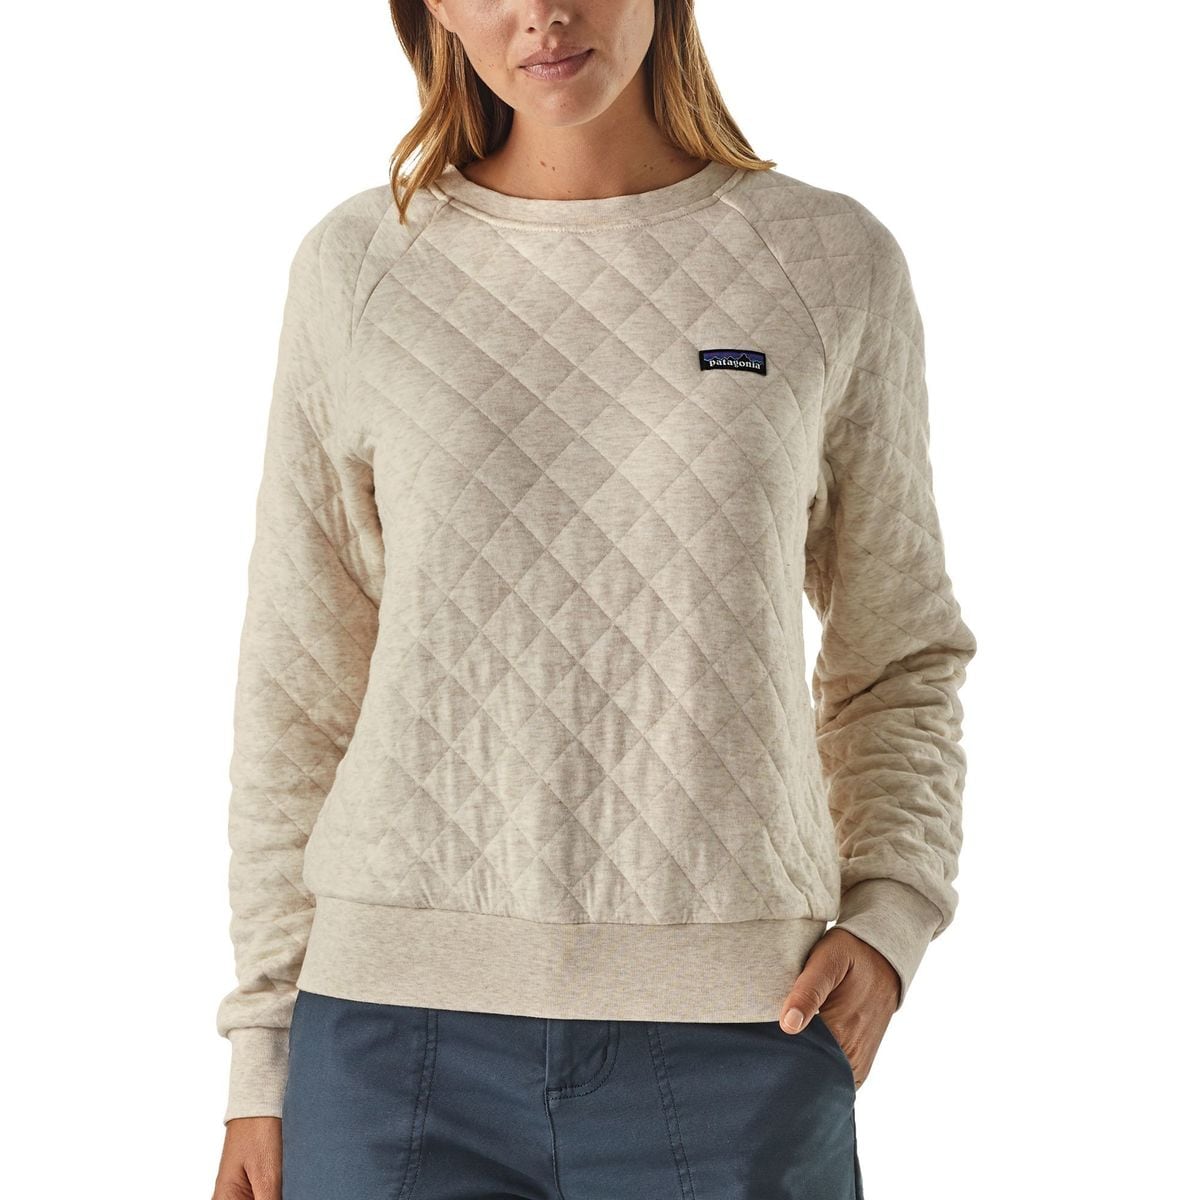 Patagonia Organic Cotton Quilt Crew Sweatshirt - Women's - Clothing